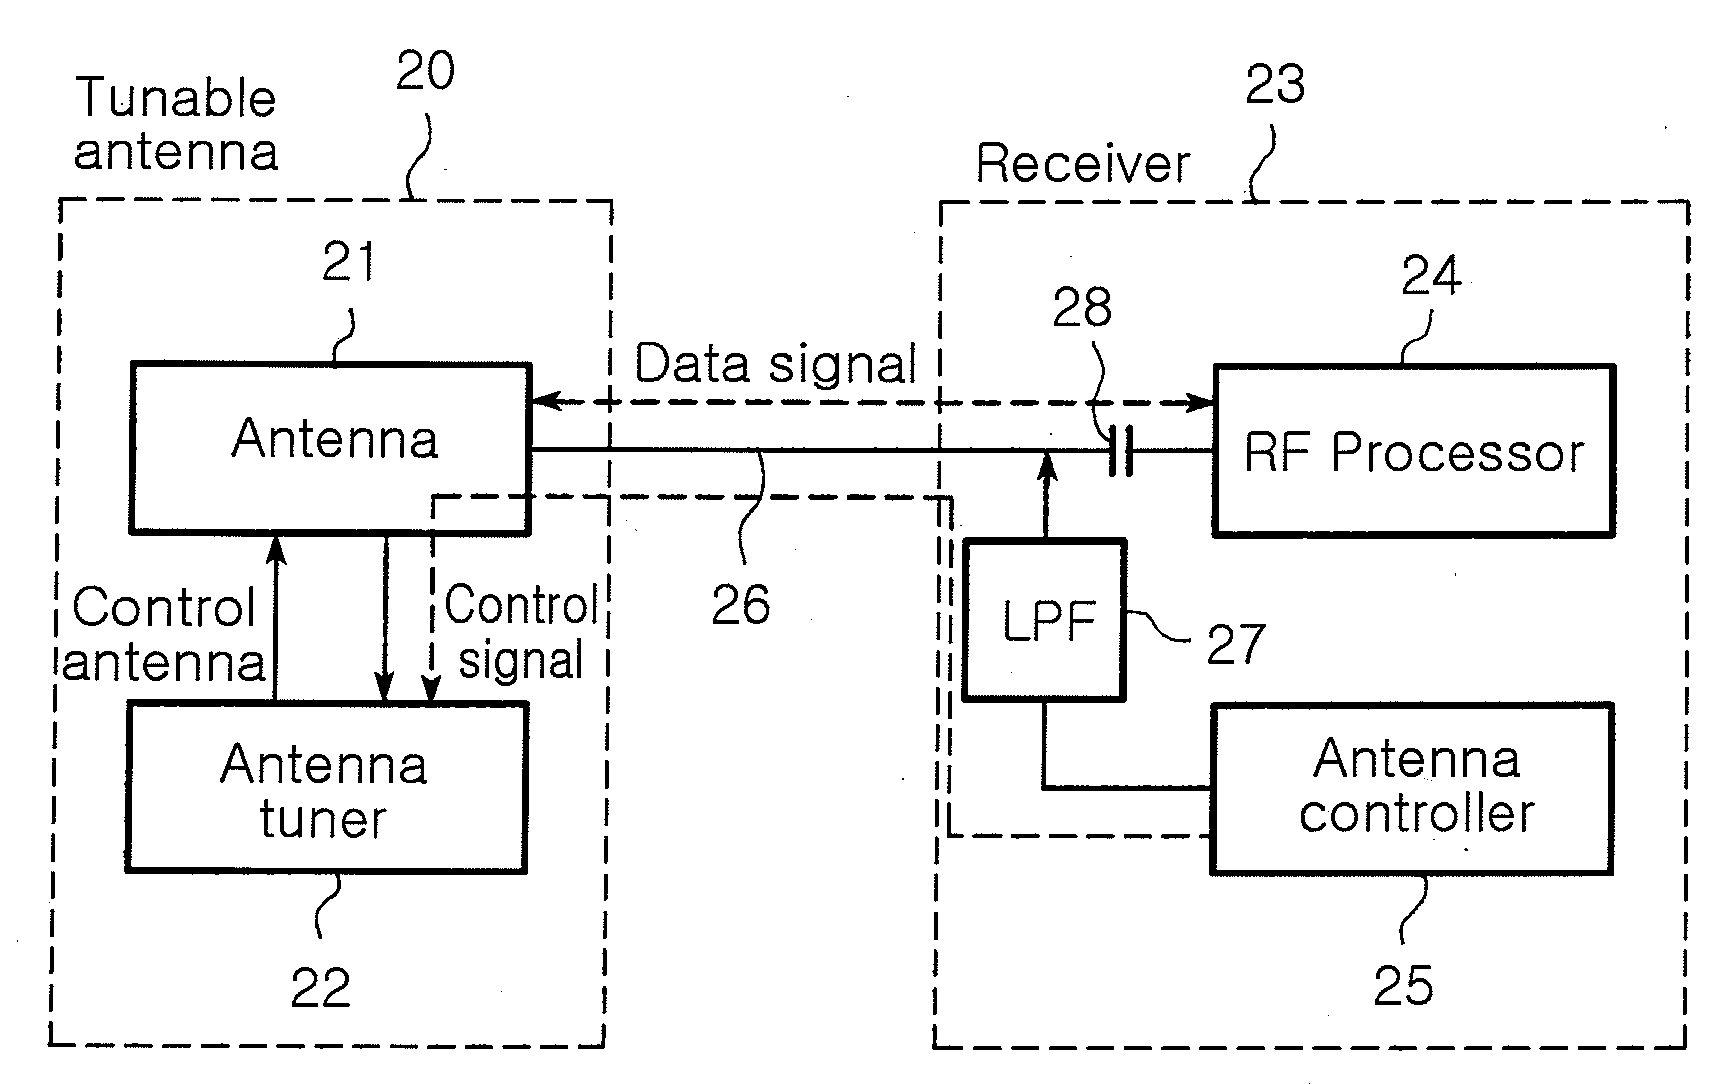 Tunable antenna control unit